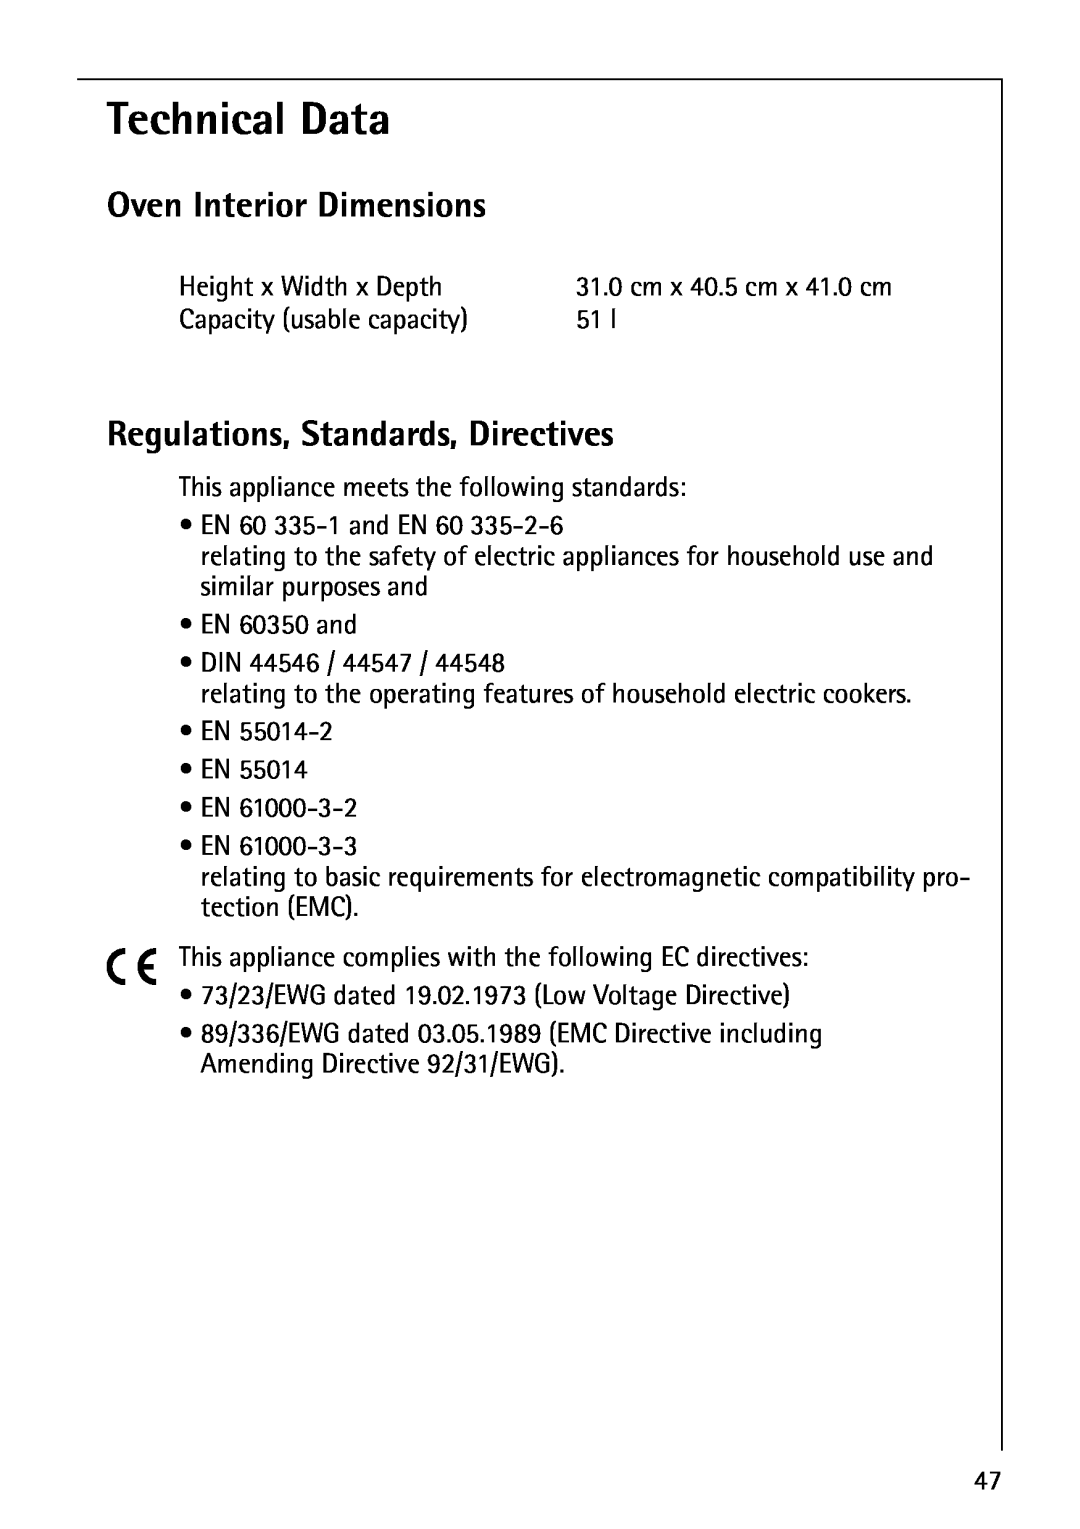 AEG E3100-1 manual Technical Data, Oven Interior Dimensions, Regulations, Standards, Directives 